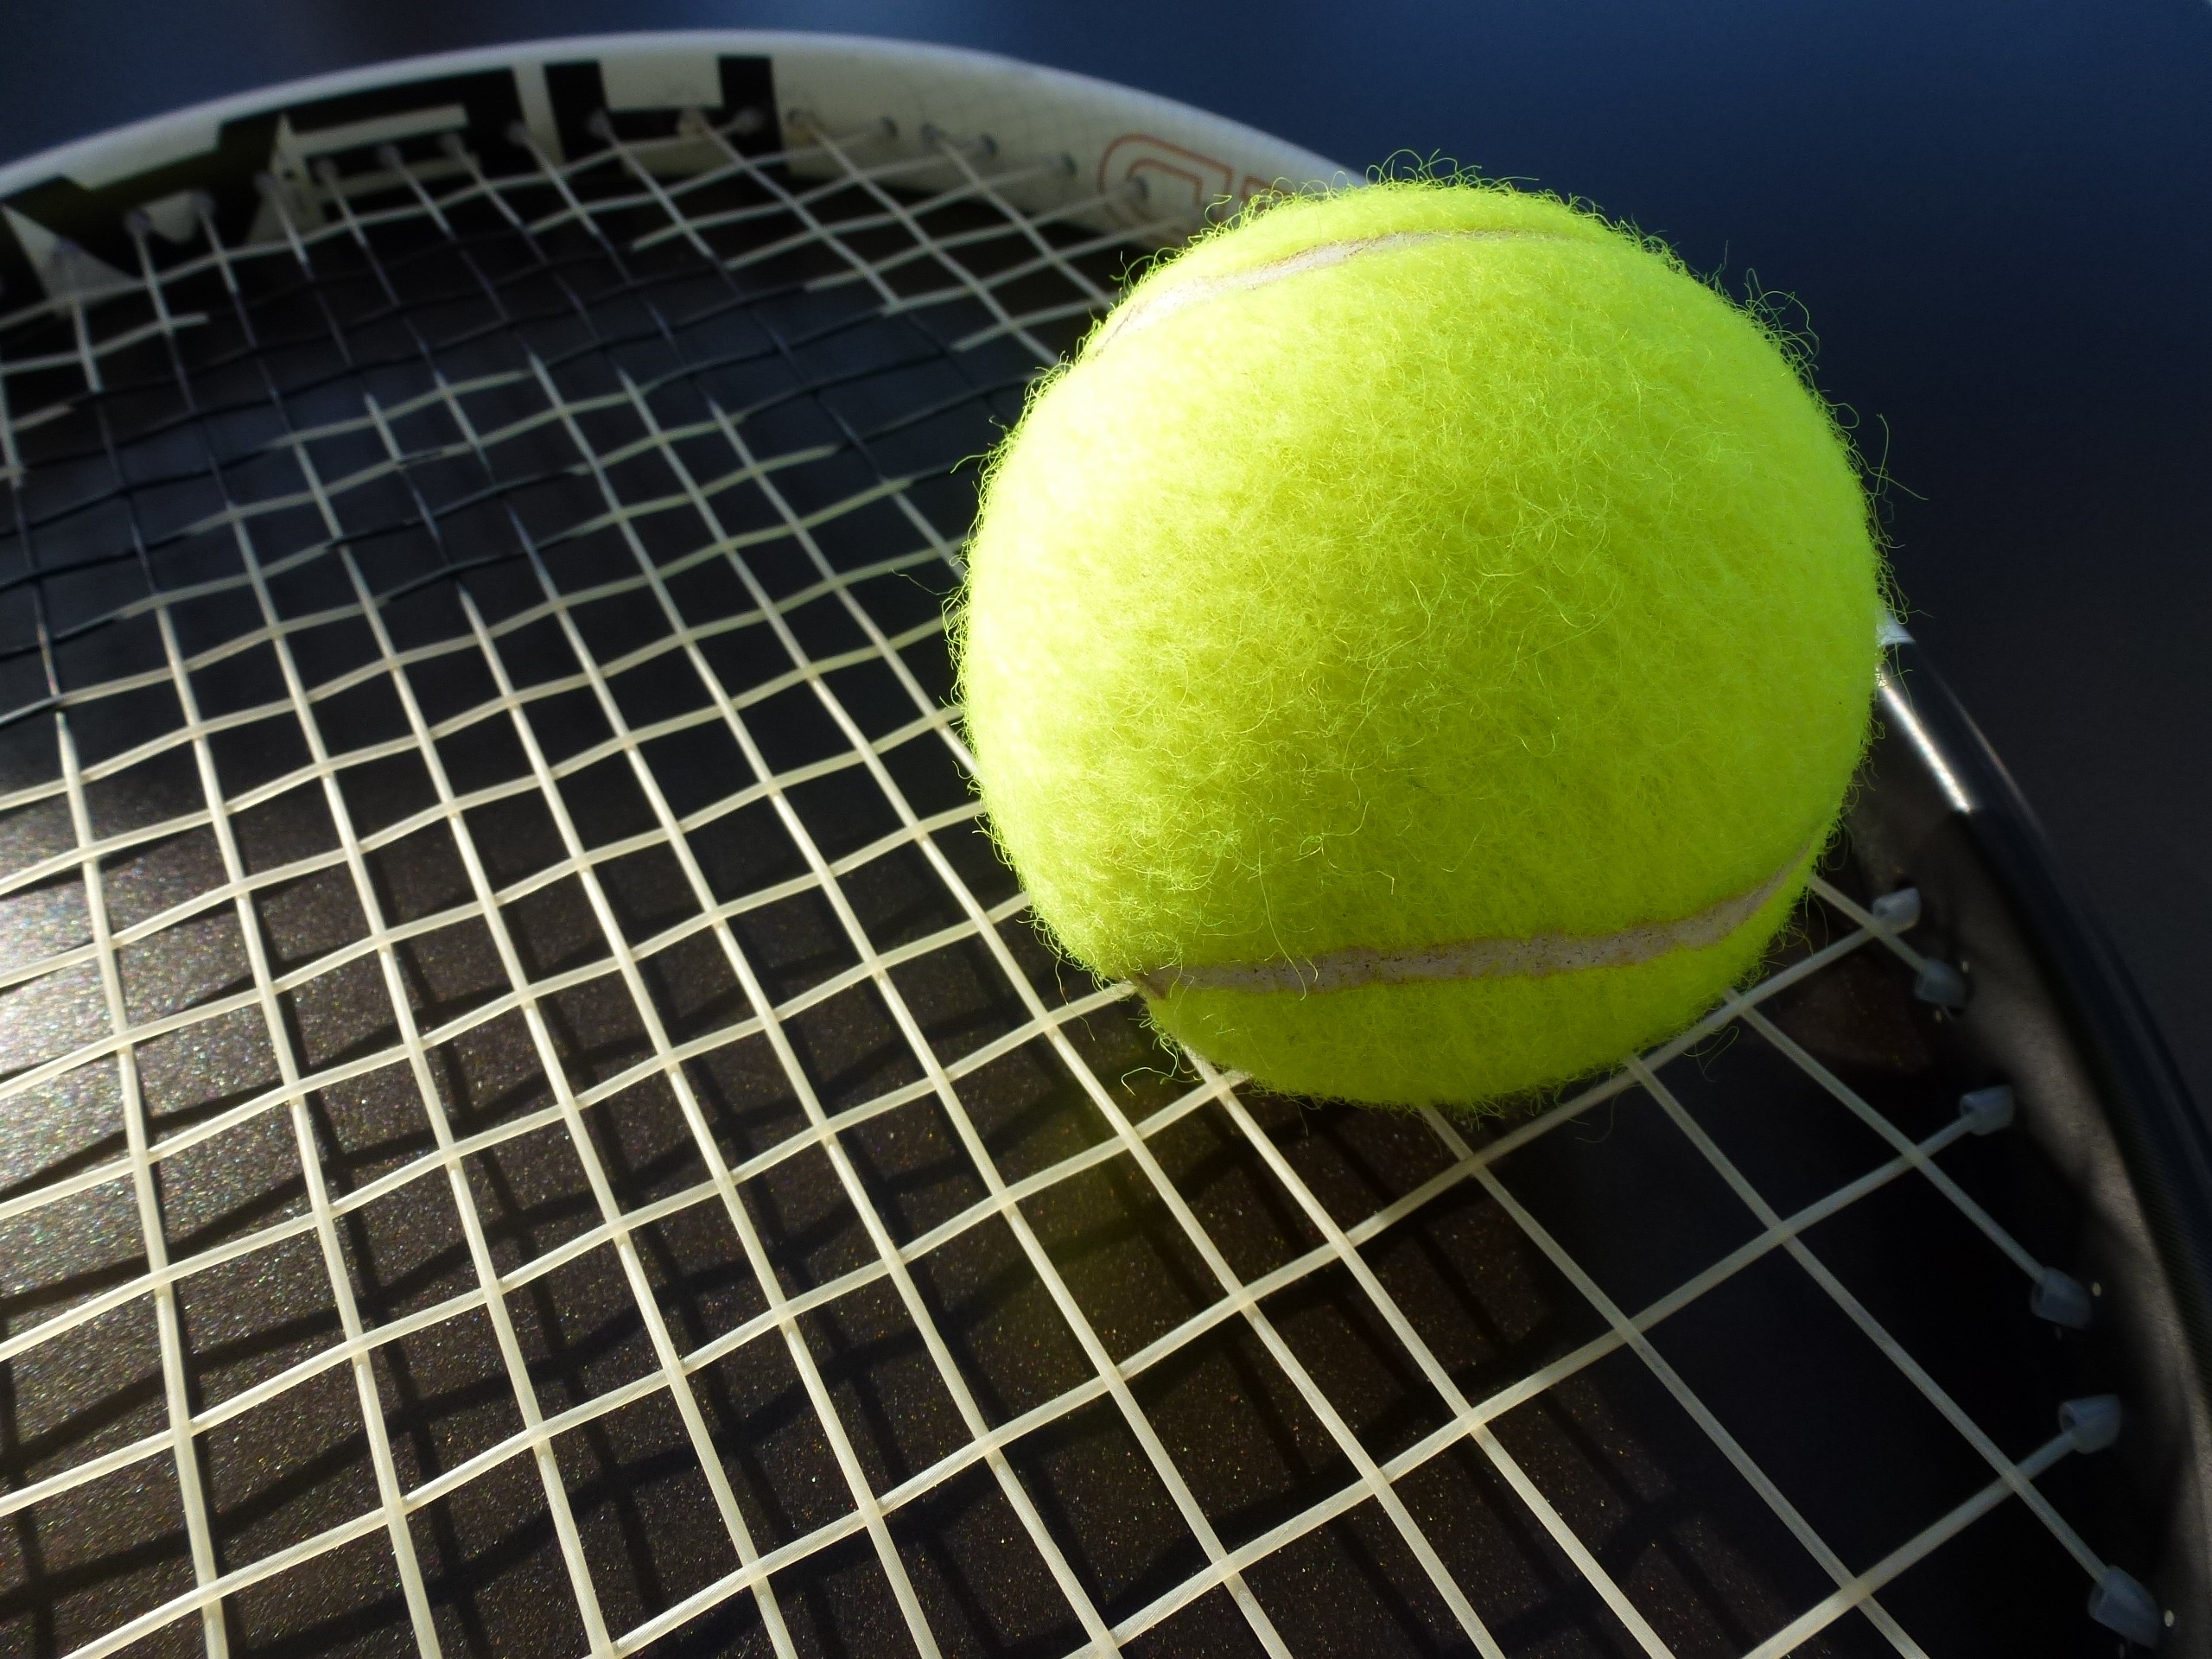 A tennis ball on a racket